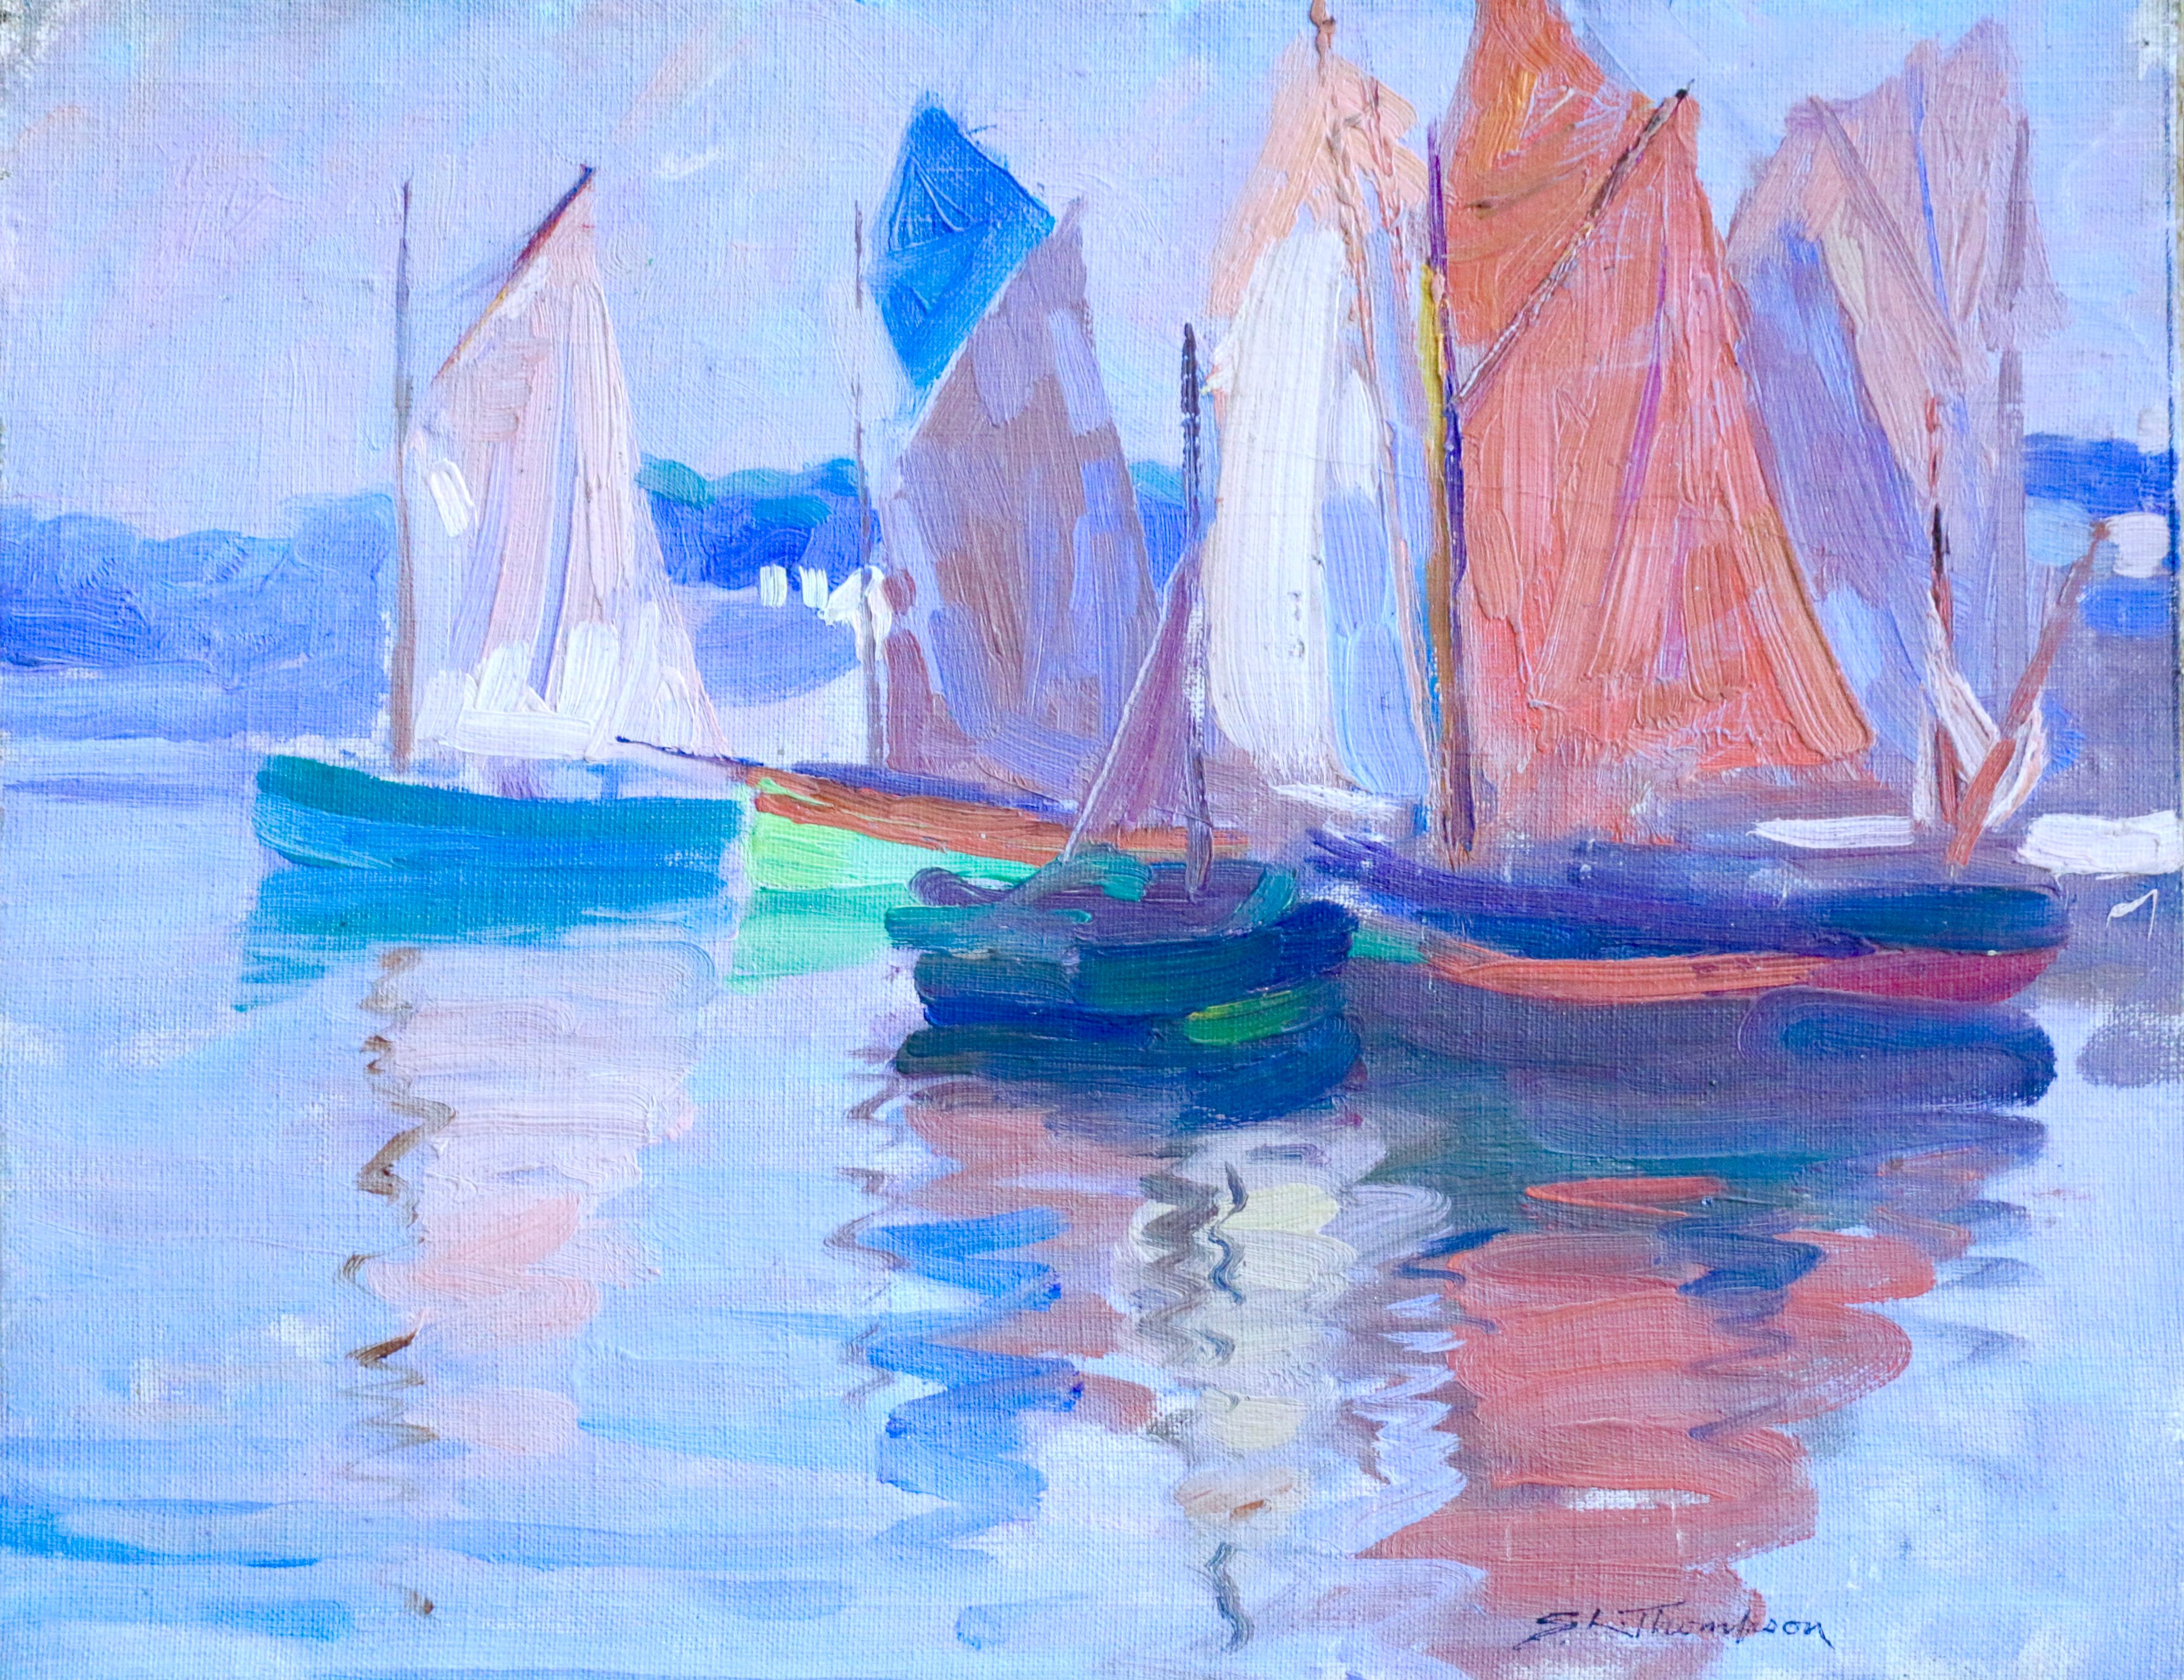 Sydney Lough Thompson Landscape Painting - Concarneau - 20th Century Oil, Boats in Harbour, Seascape by Sydney Thompson